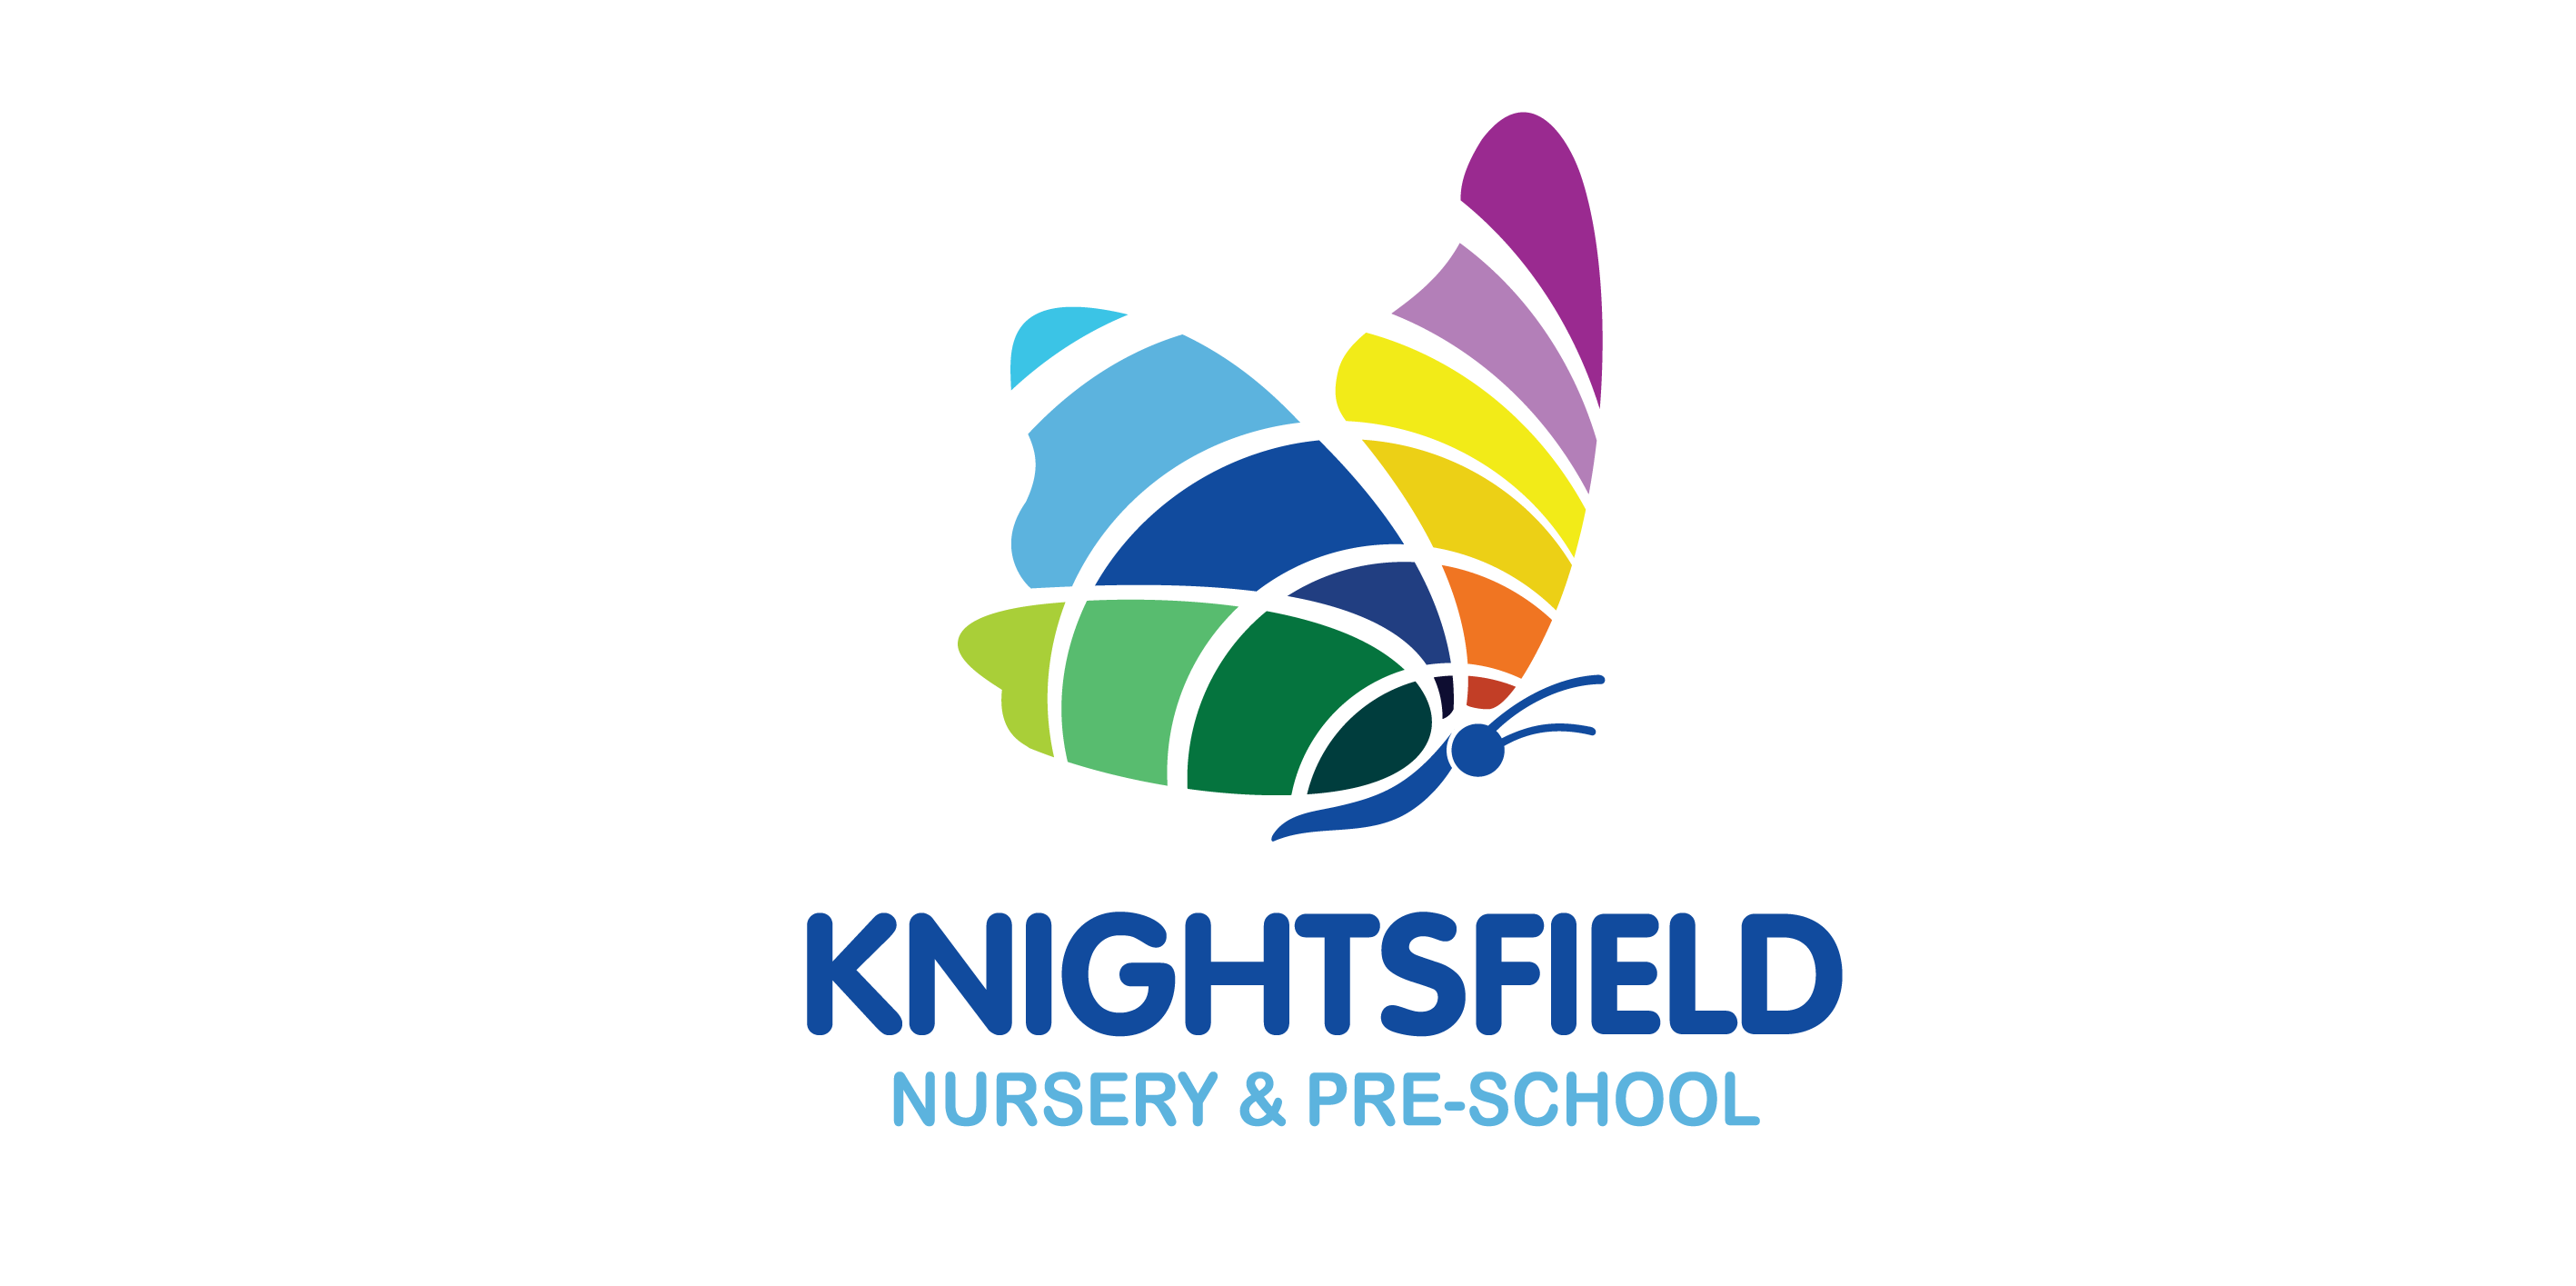 Knightsfield Nursery & Pre-School CIC